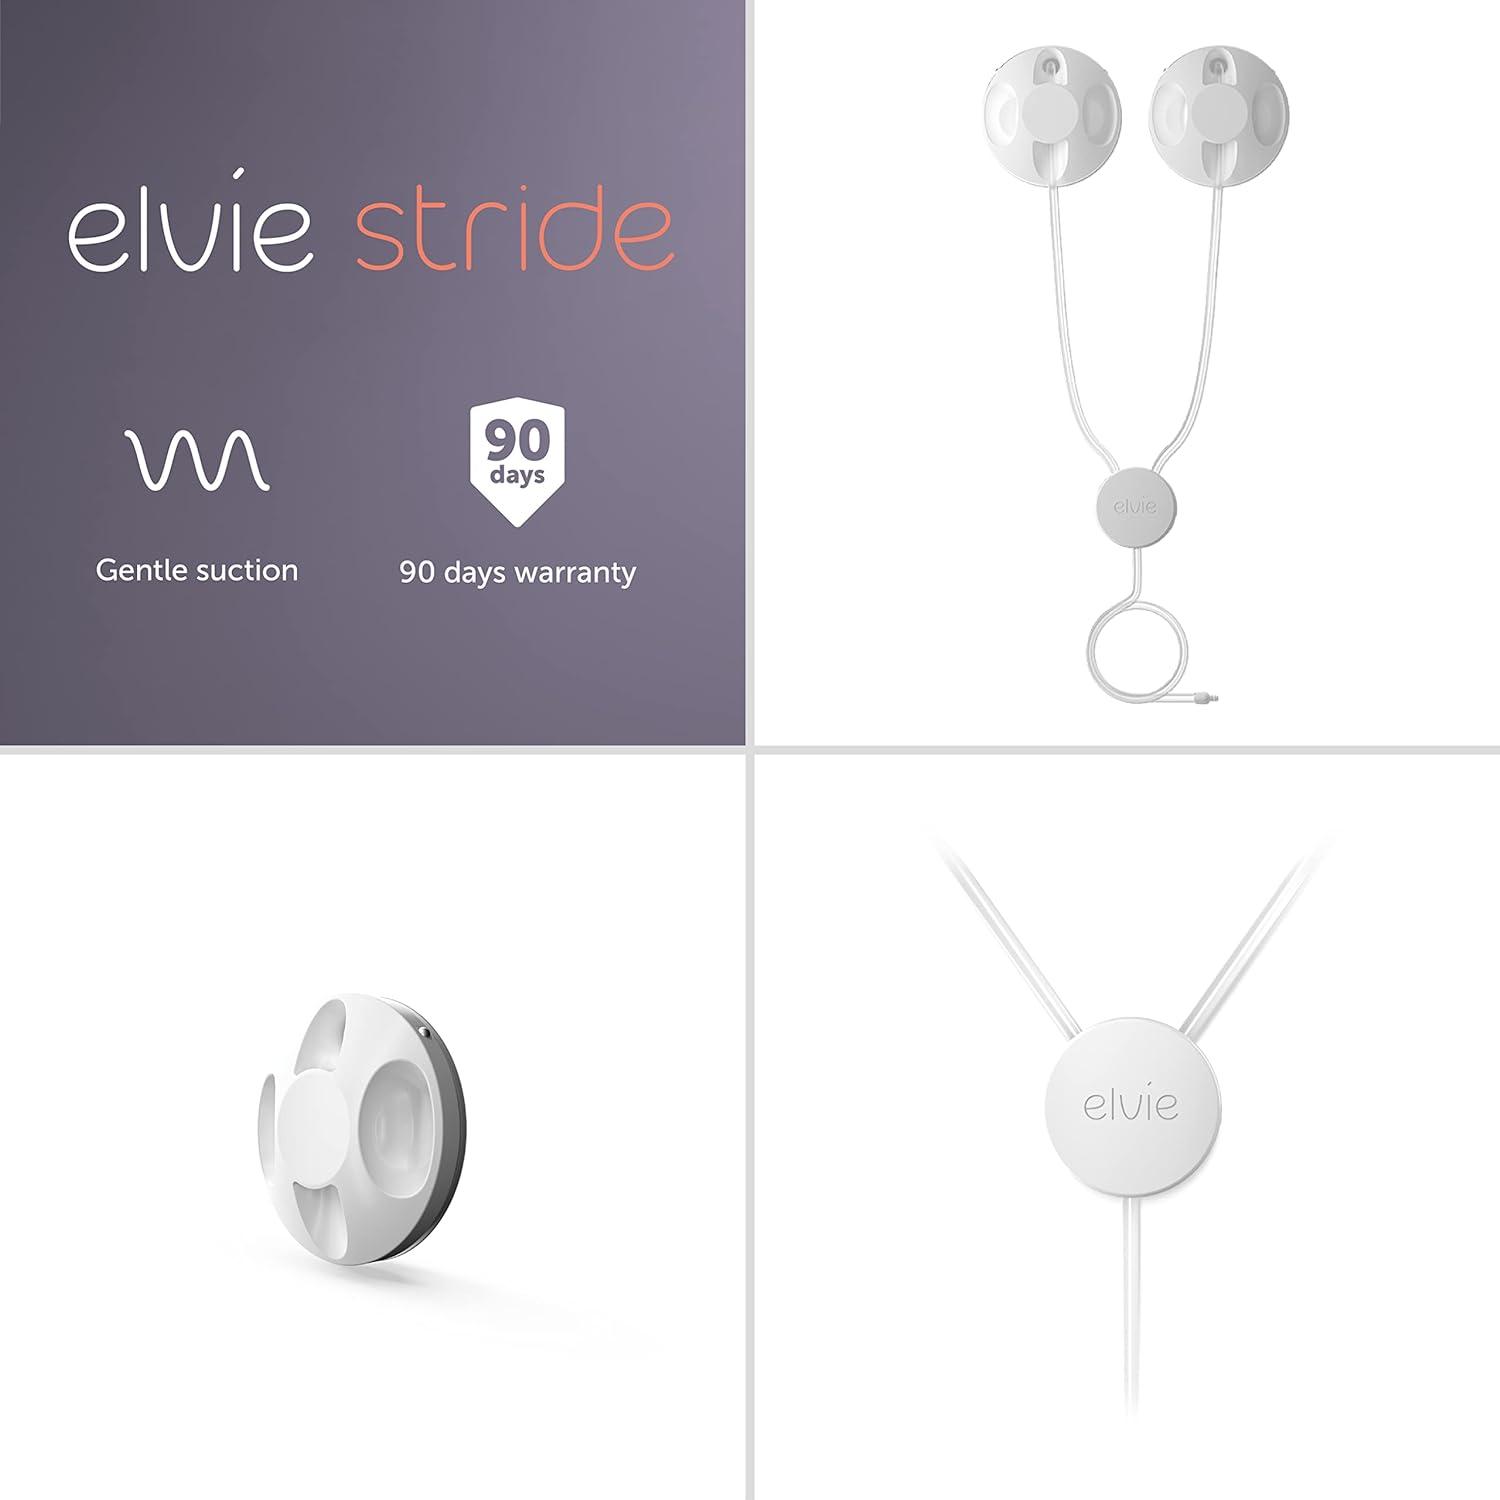 Elvie Stride Accessories for Stride only-not for Elvie Pump